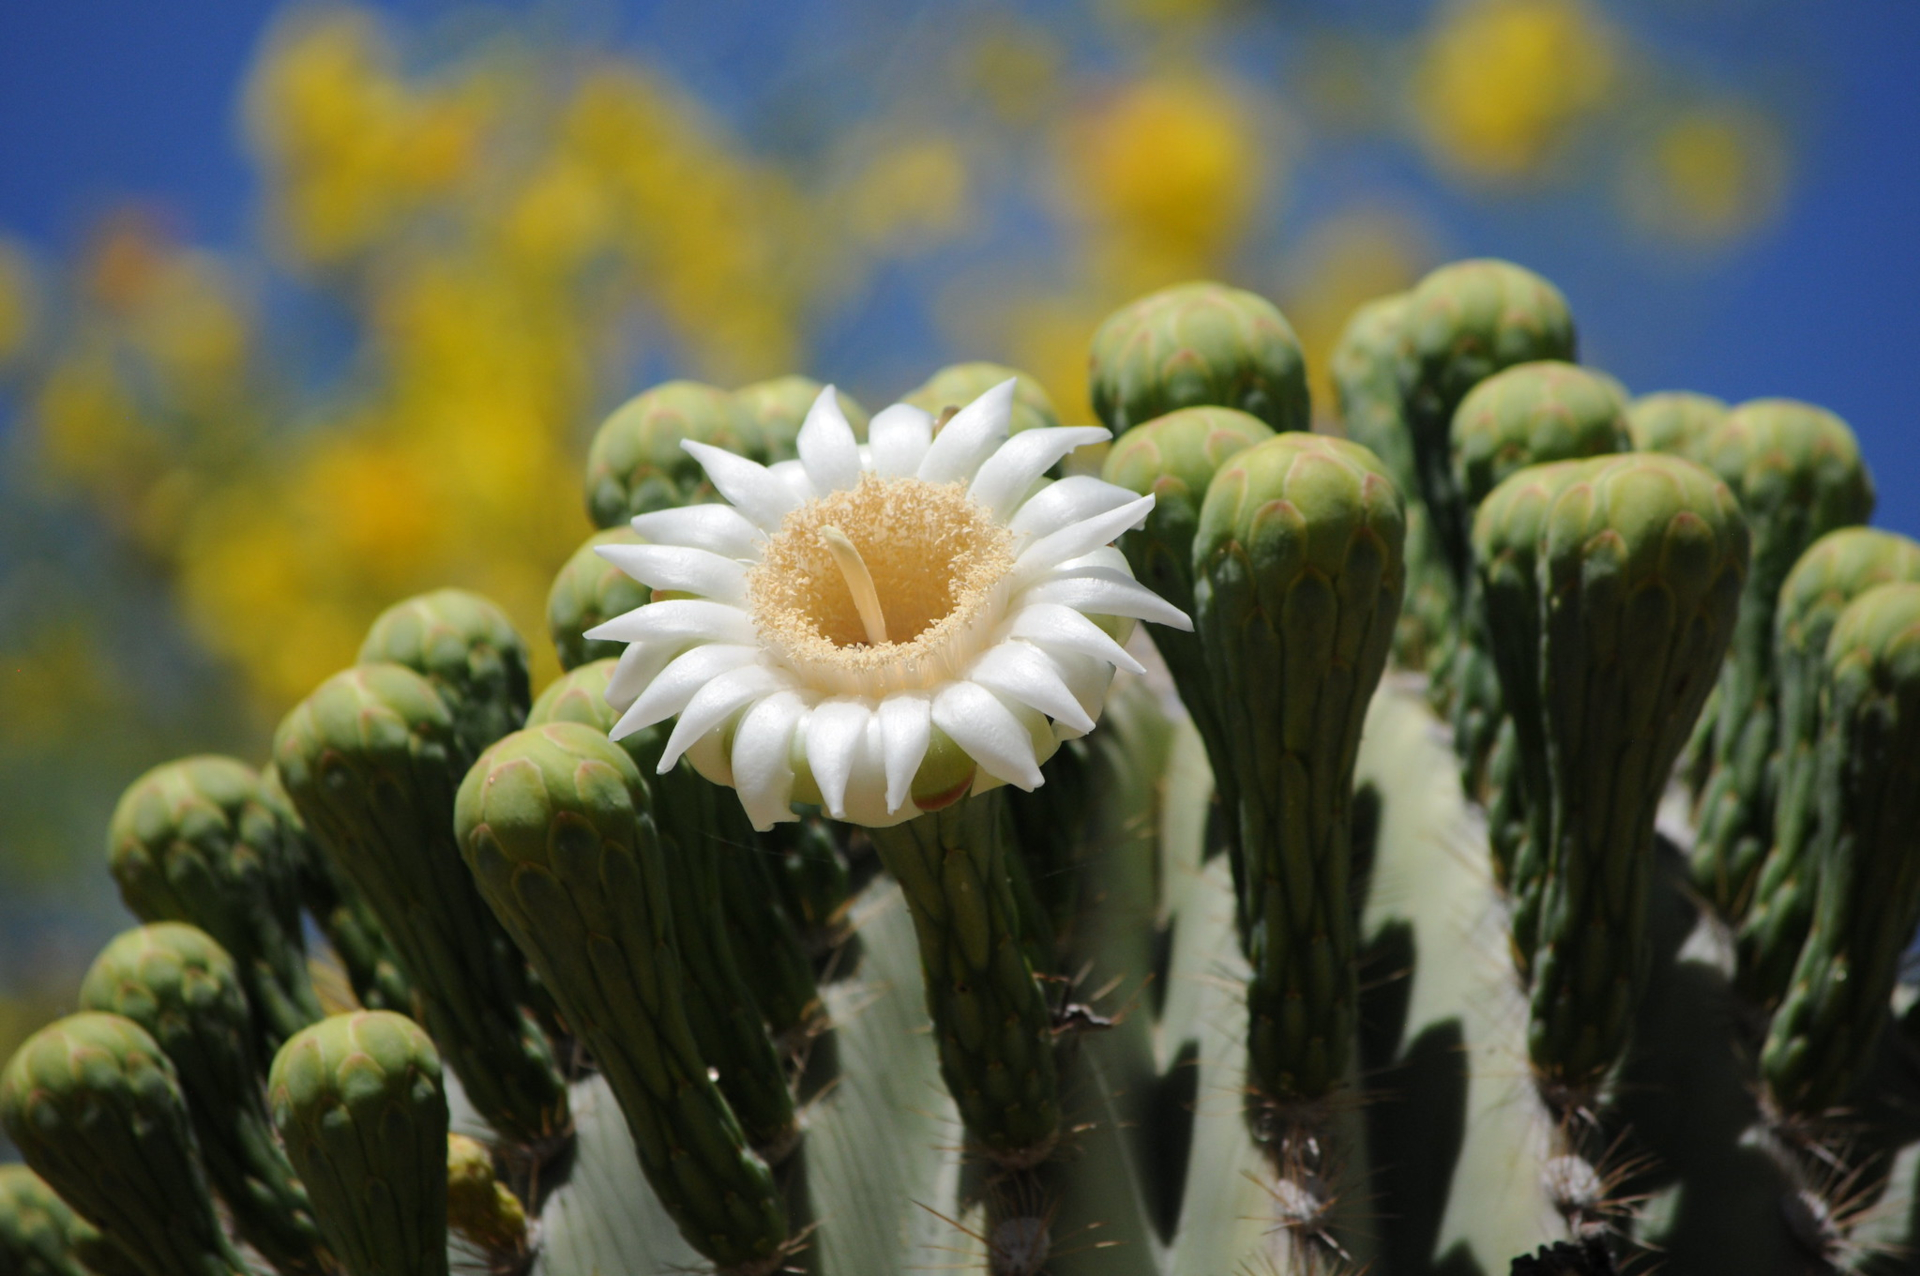 Saguaro bloom, Image by Andy Blacklidge hockeyholic at Flickr